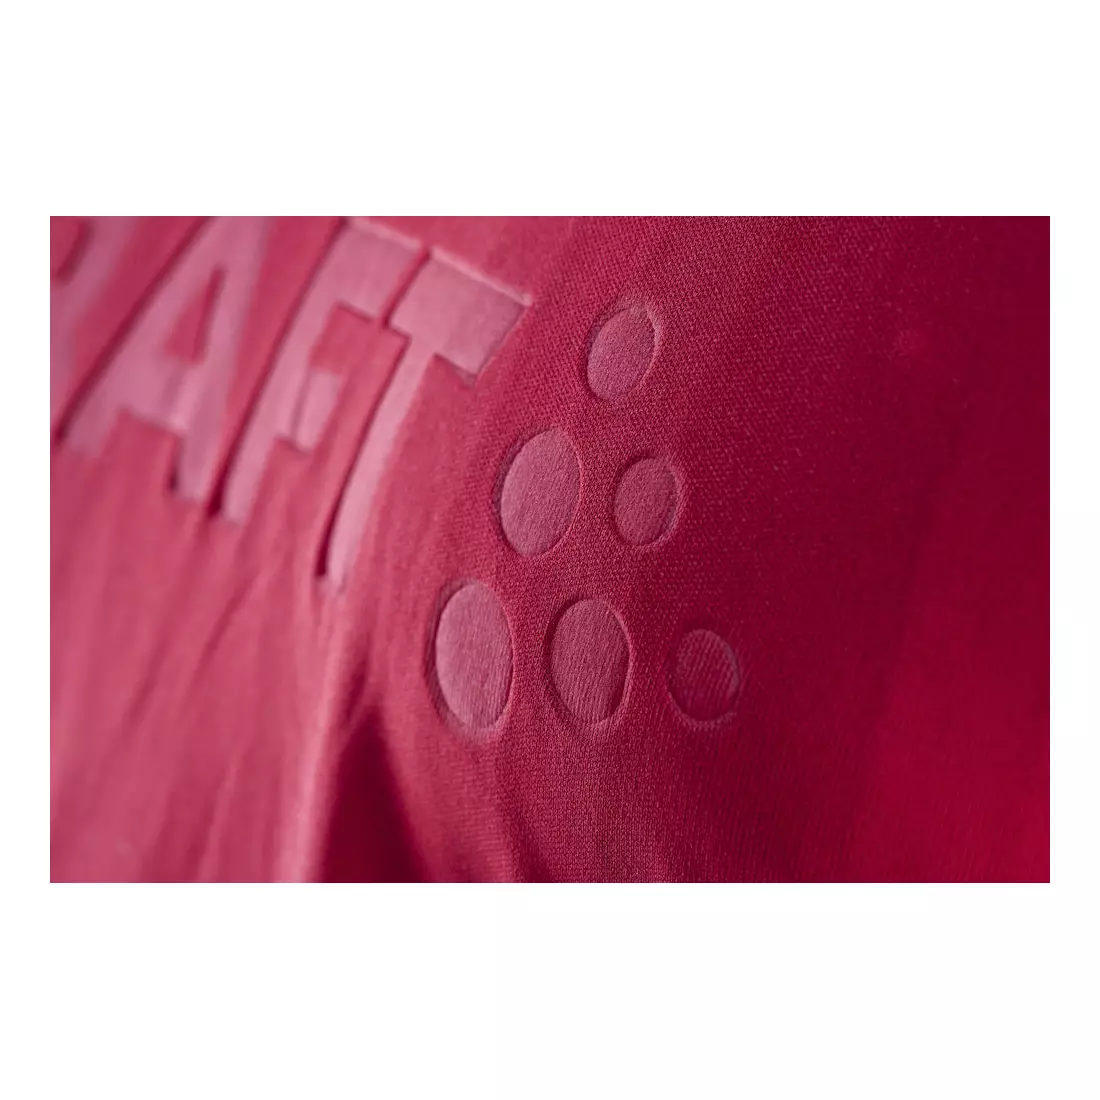 CRAFT PRIME Sport-T-Shirt 1902497-2851